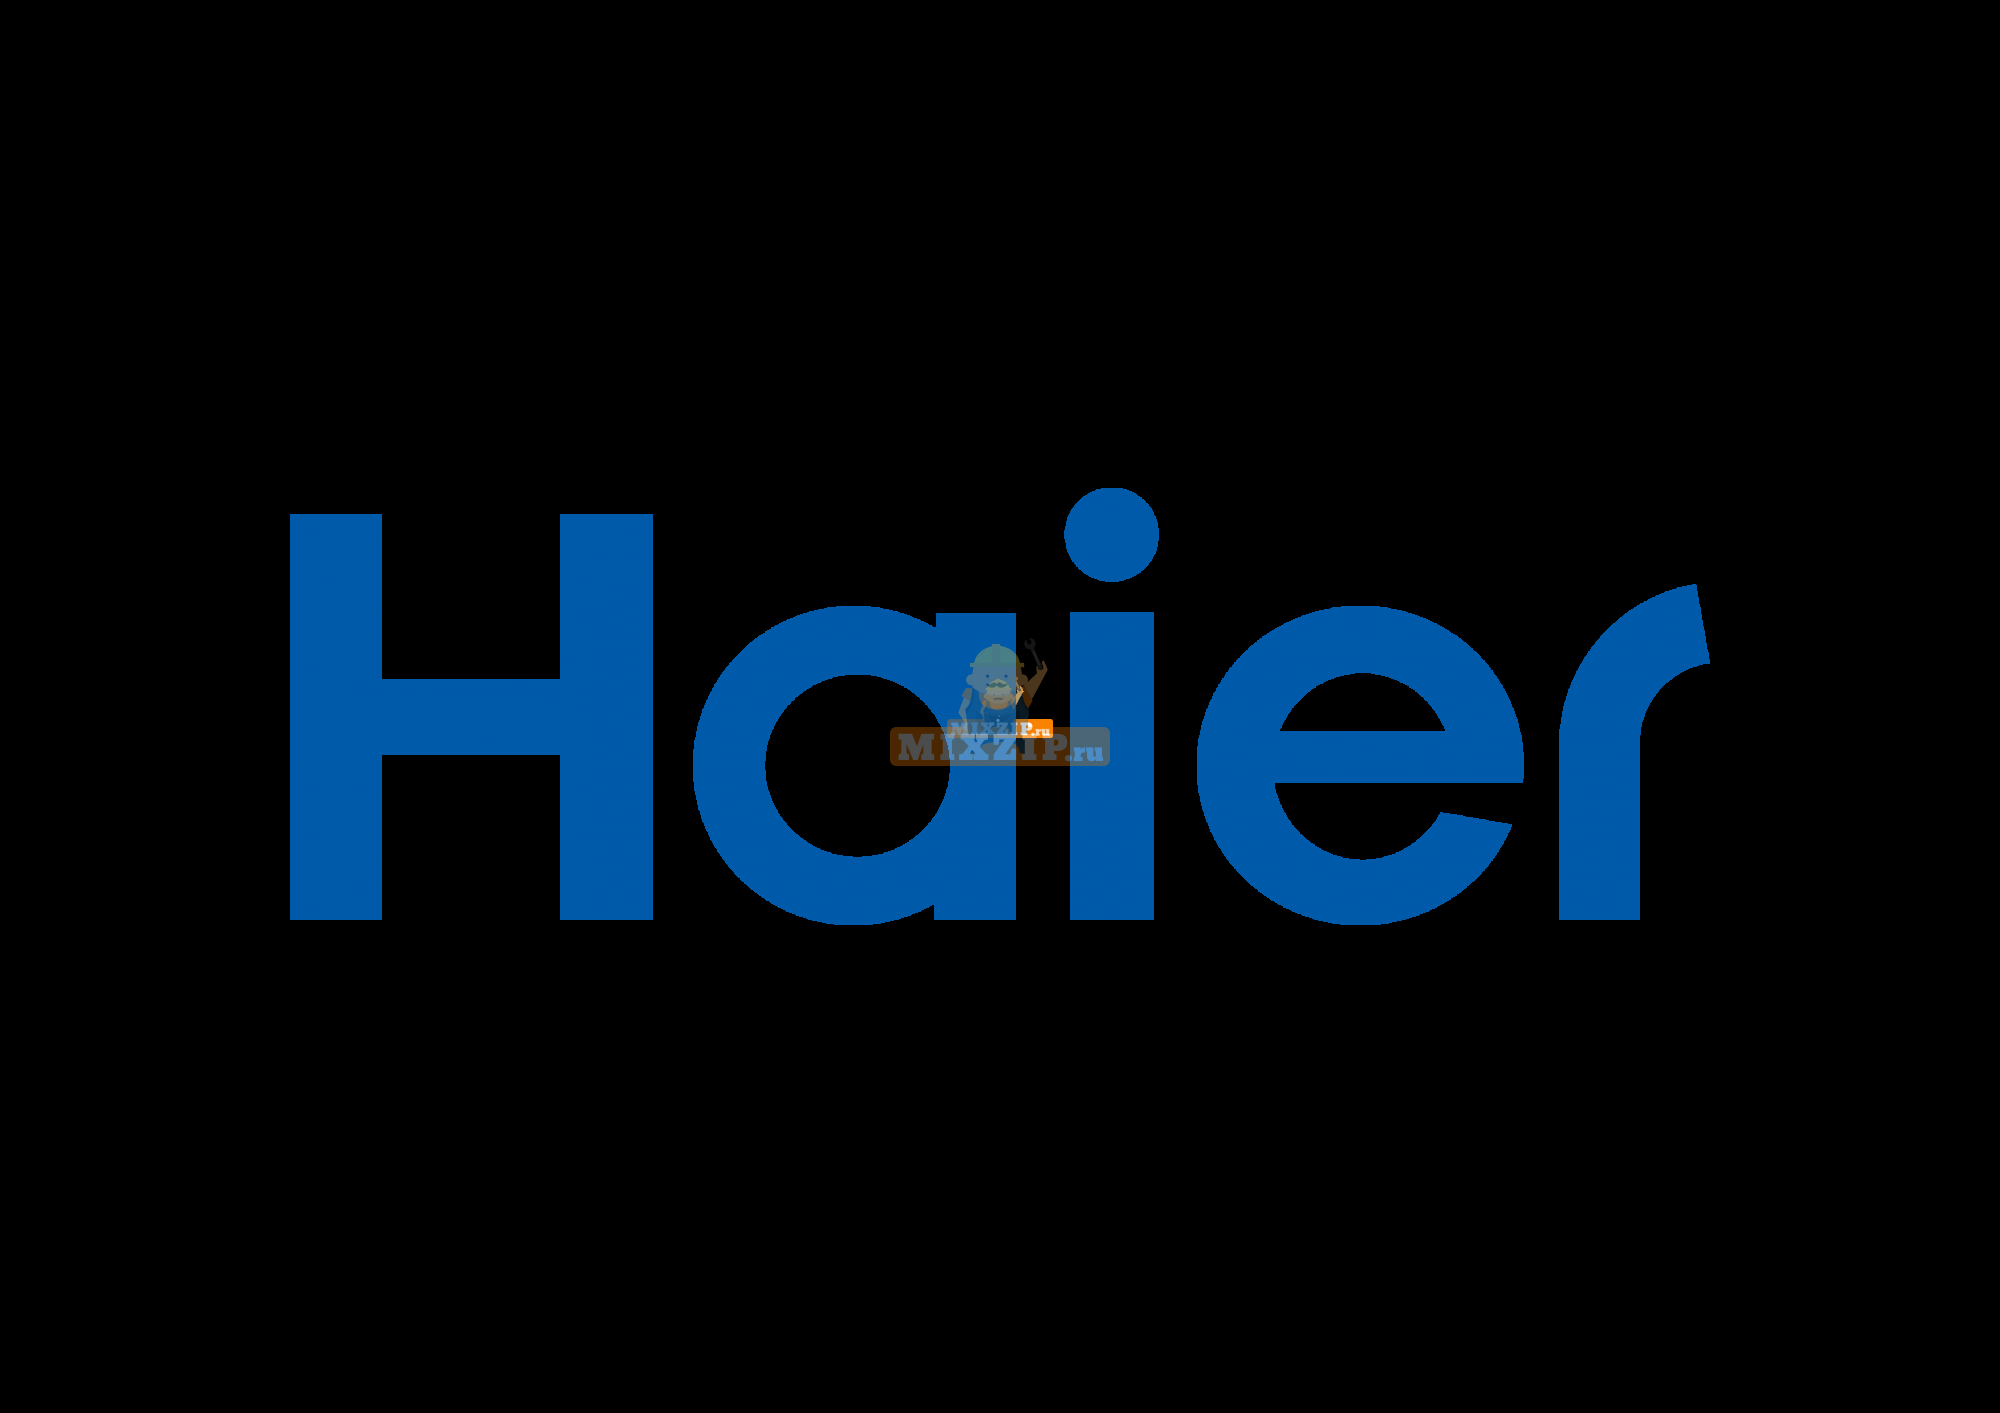 Haier smart home co ltd техника. Haier. Haier бренд. Надпись Haier. Хайер логотип.